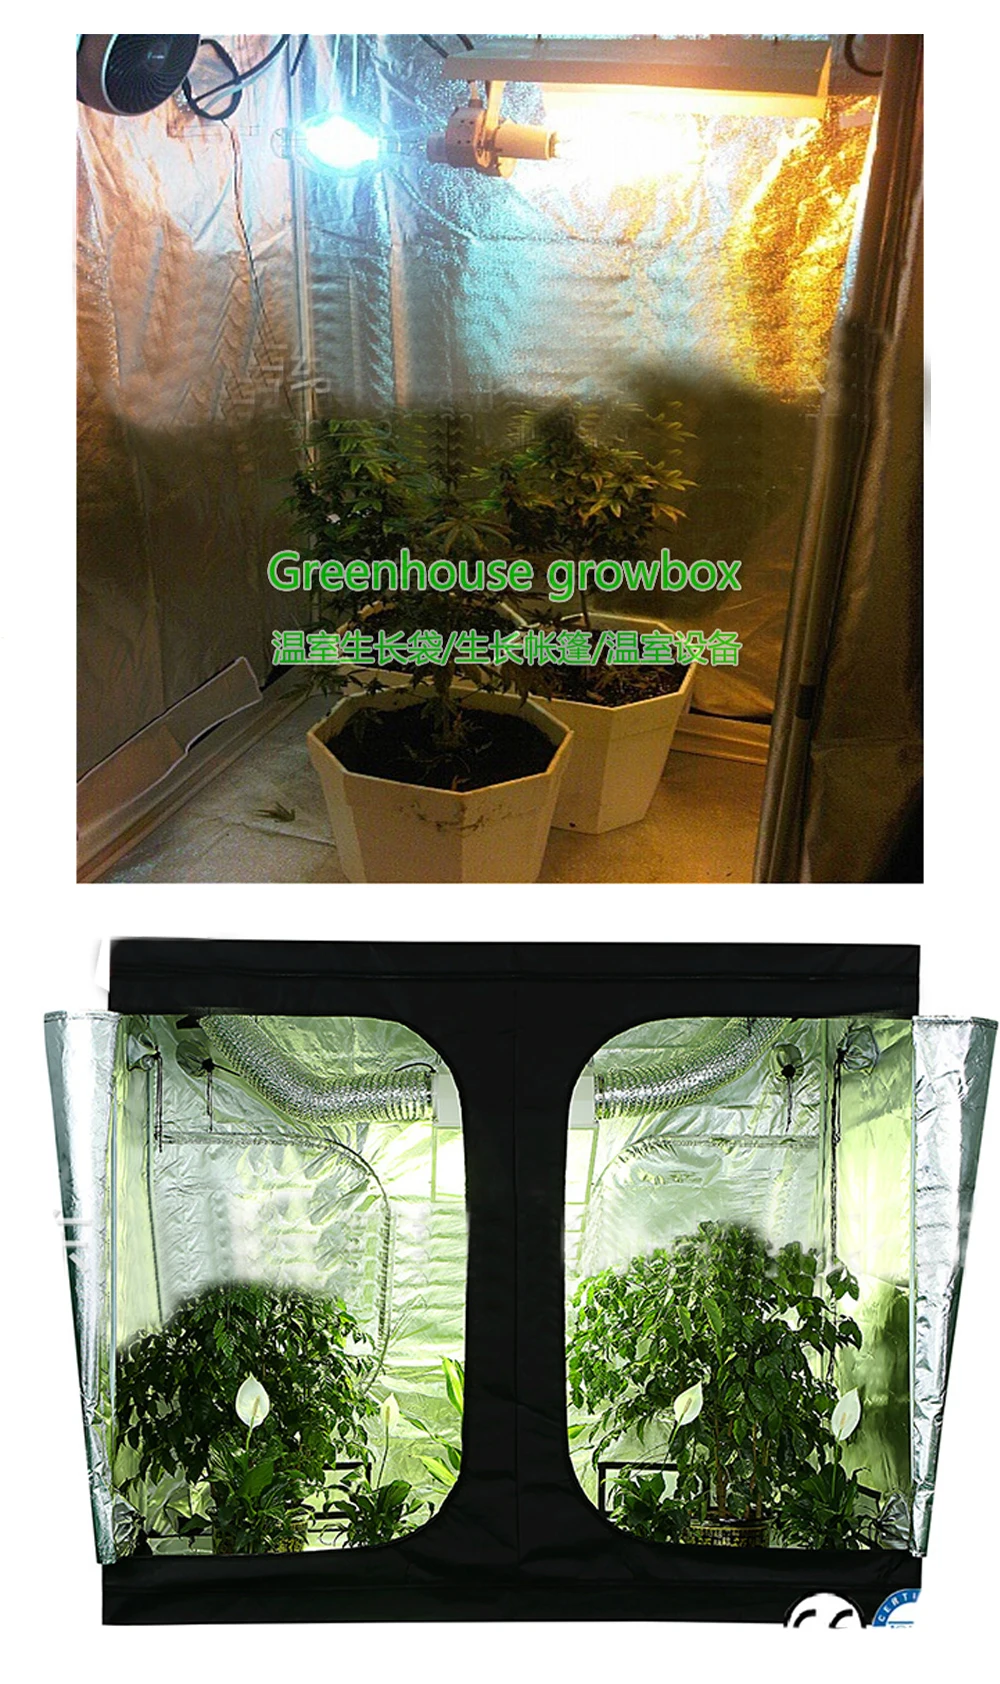 Led Grow Light Indoor Hydroponics Grow Tent,Grow Room Box Plant Grow, Reflective Mylar Non Toxic Garden Greenhouses grow indoor